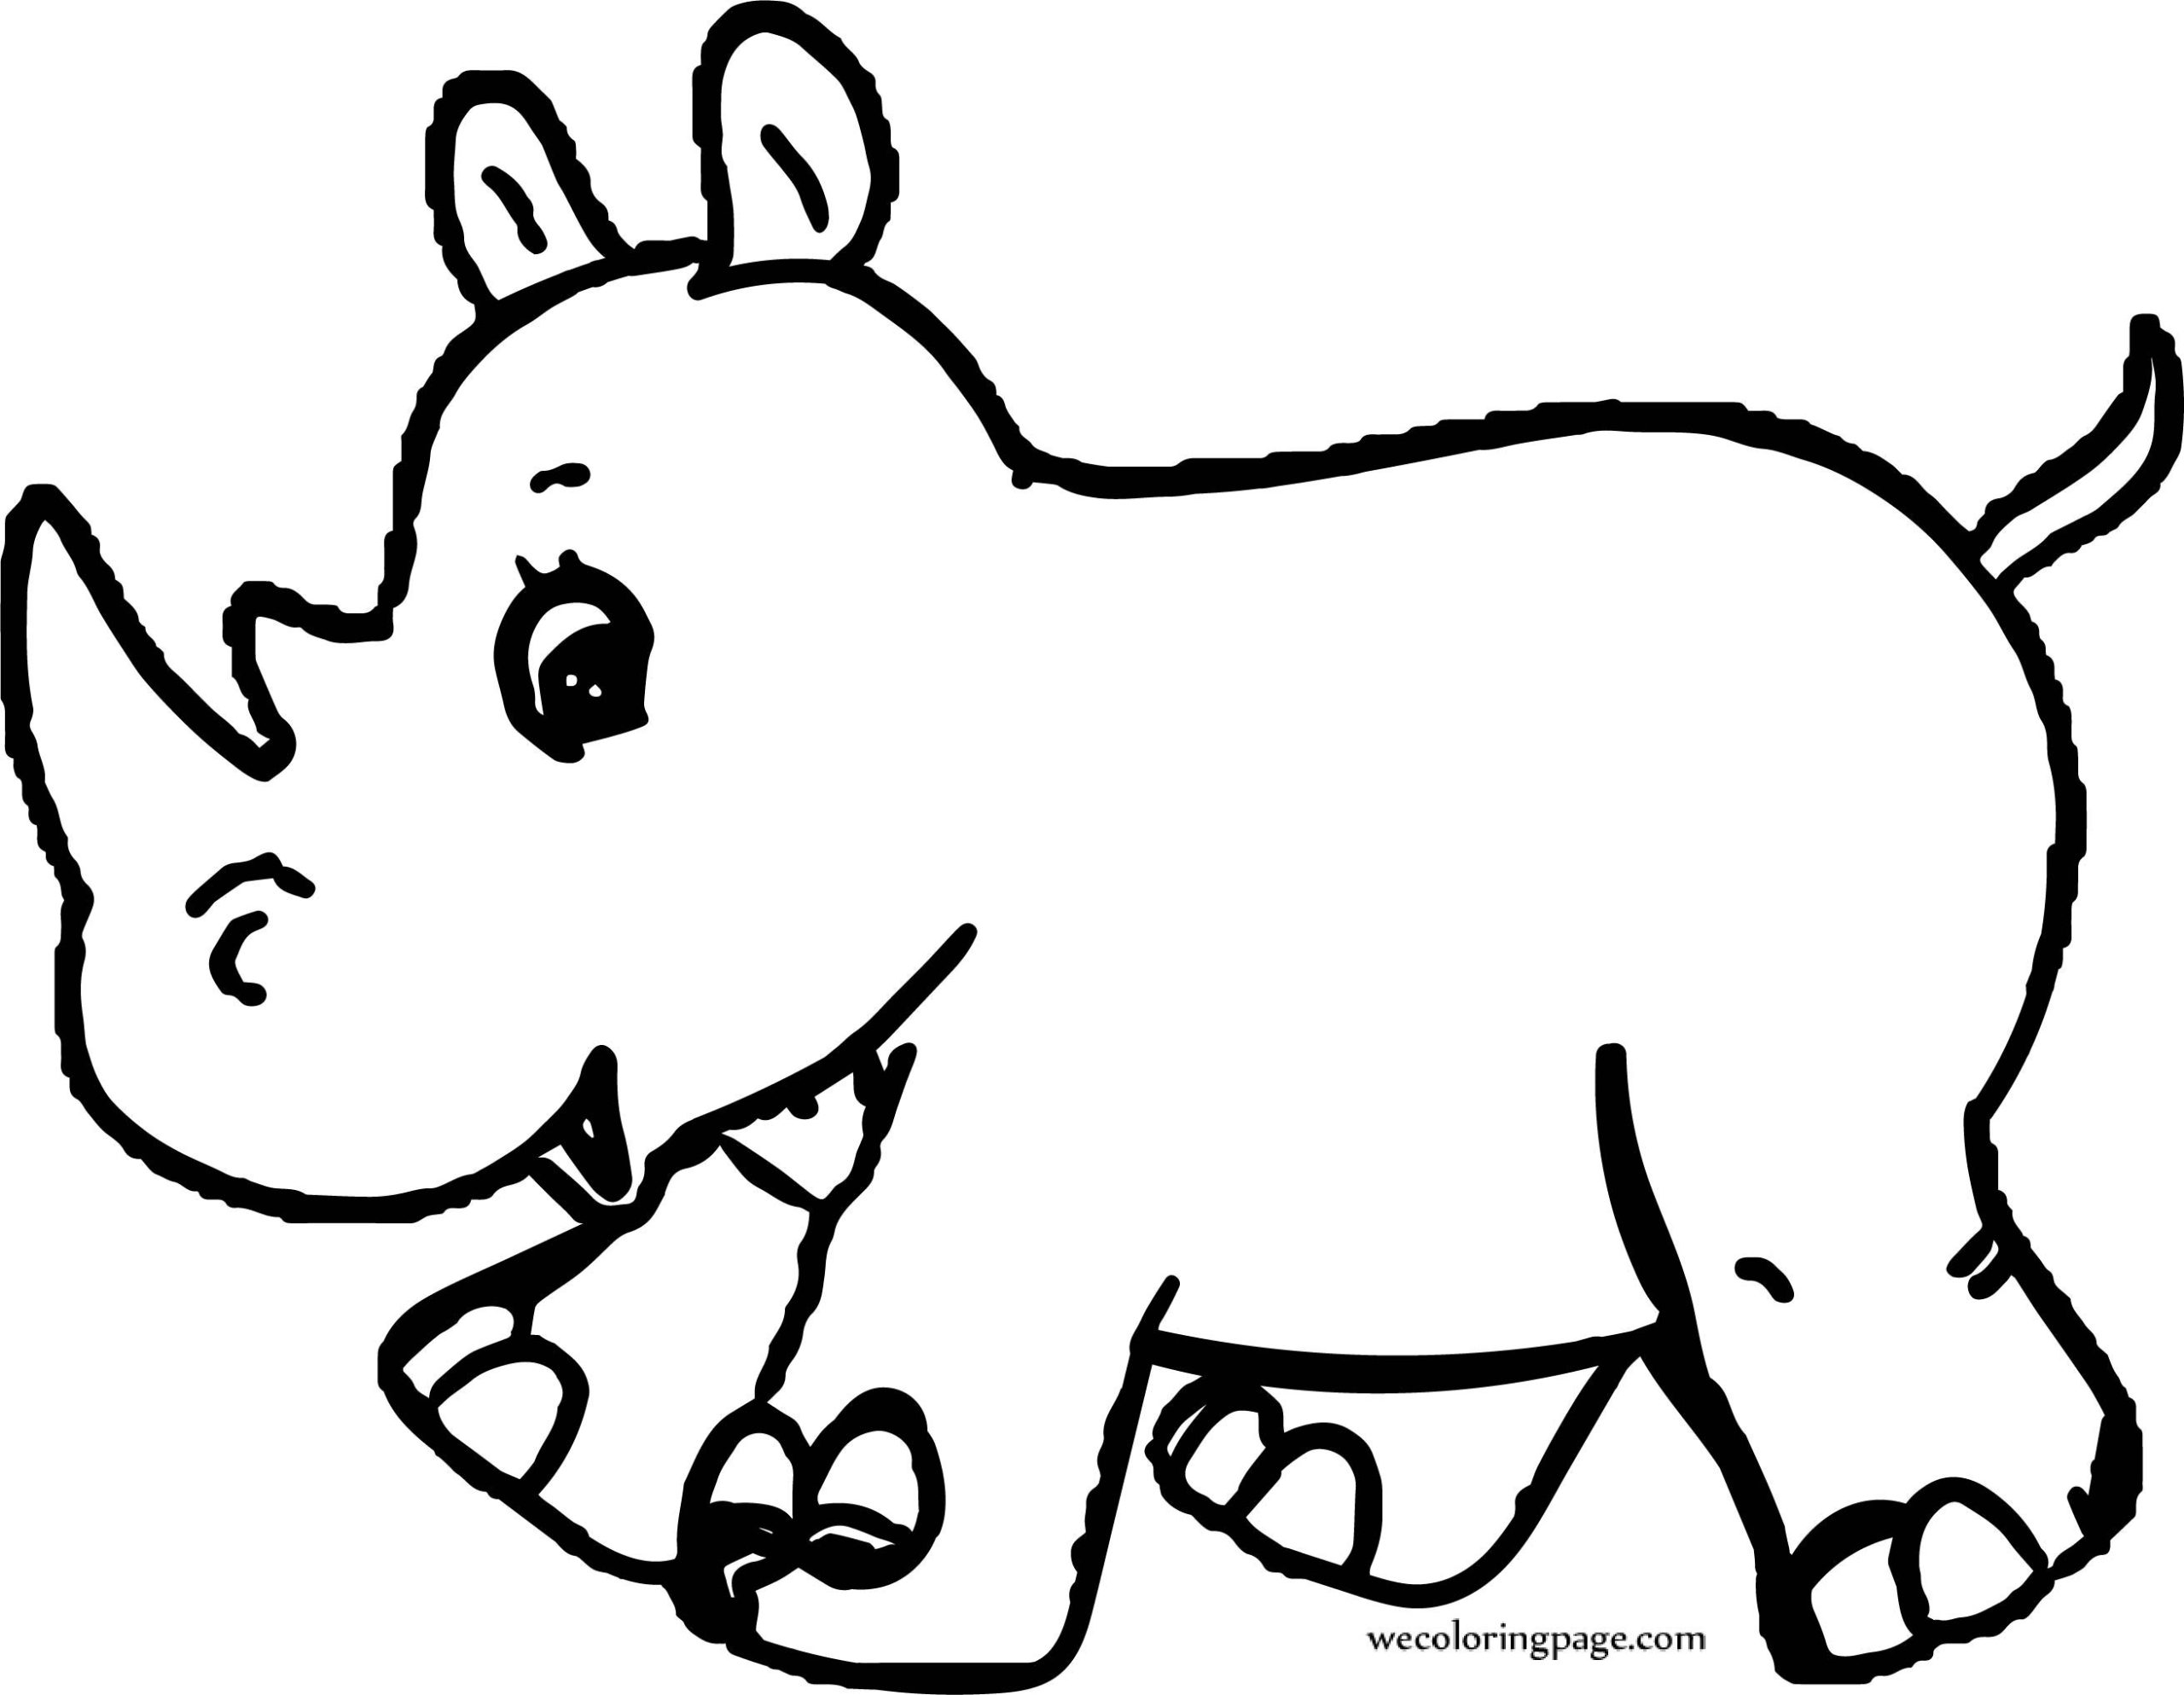 Трафарета носорога для детей